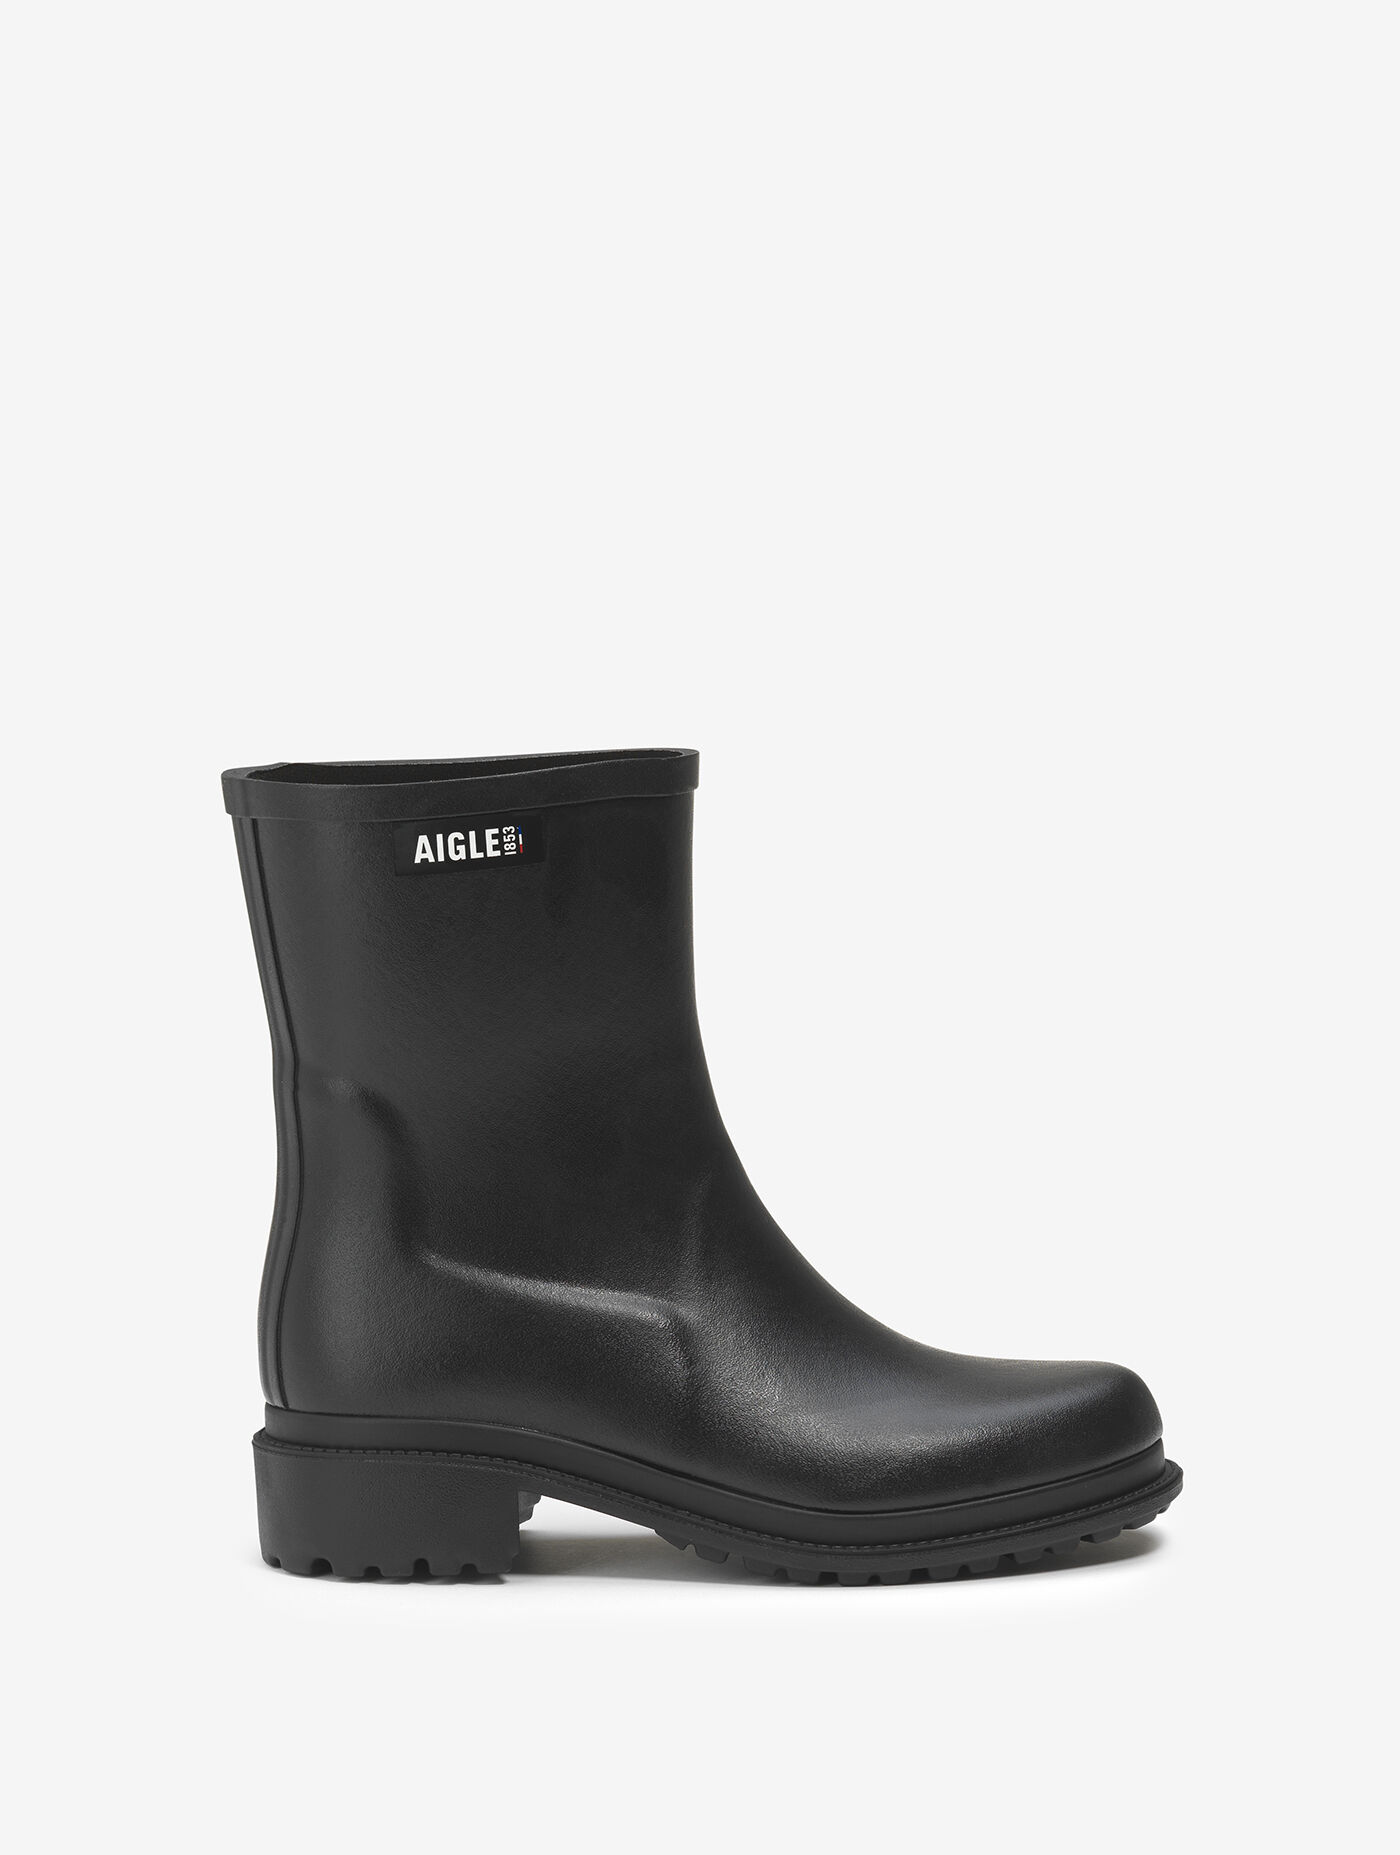 Urban ankle rain boot, made in France. women | AIGLE